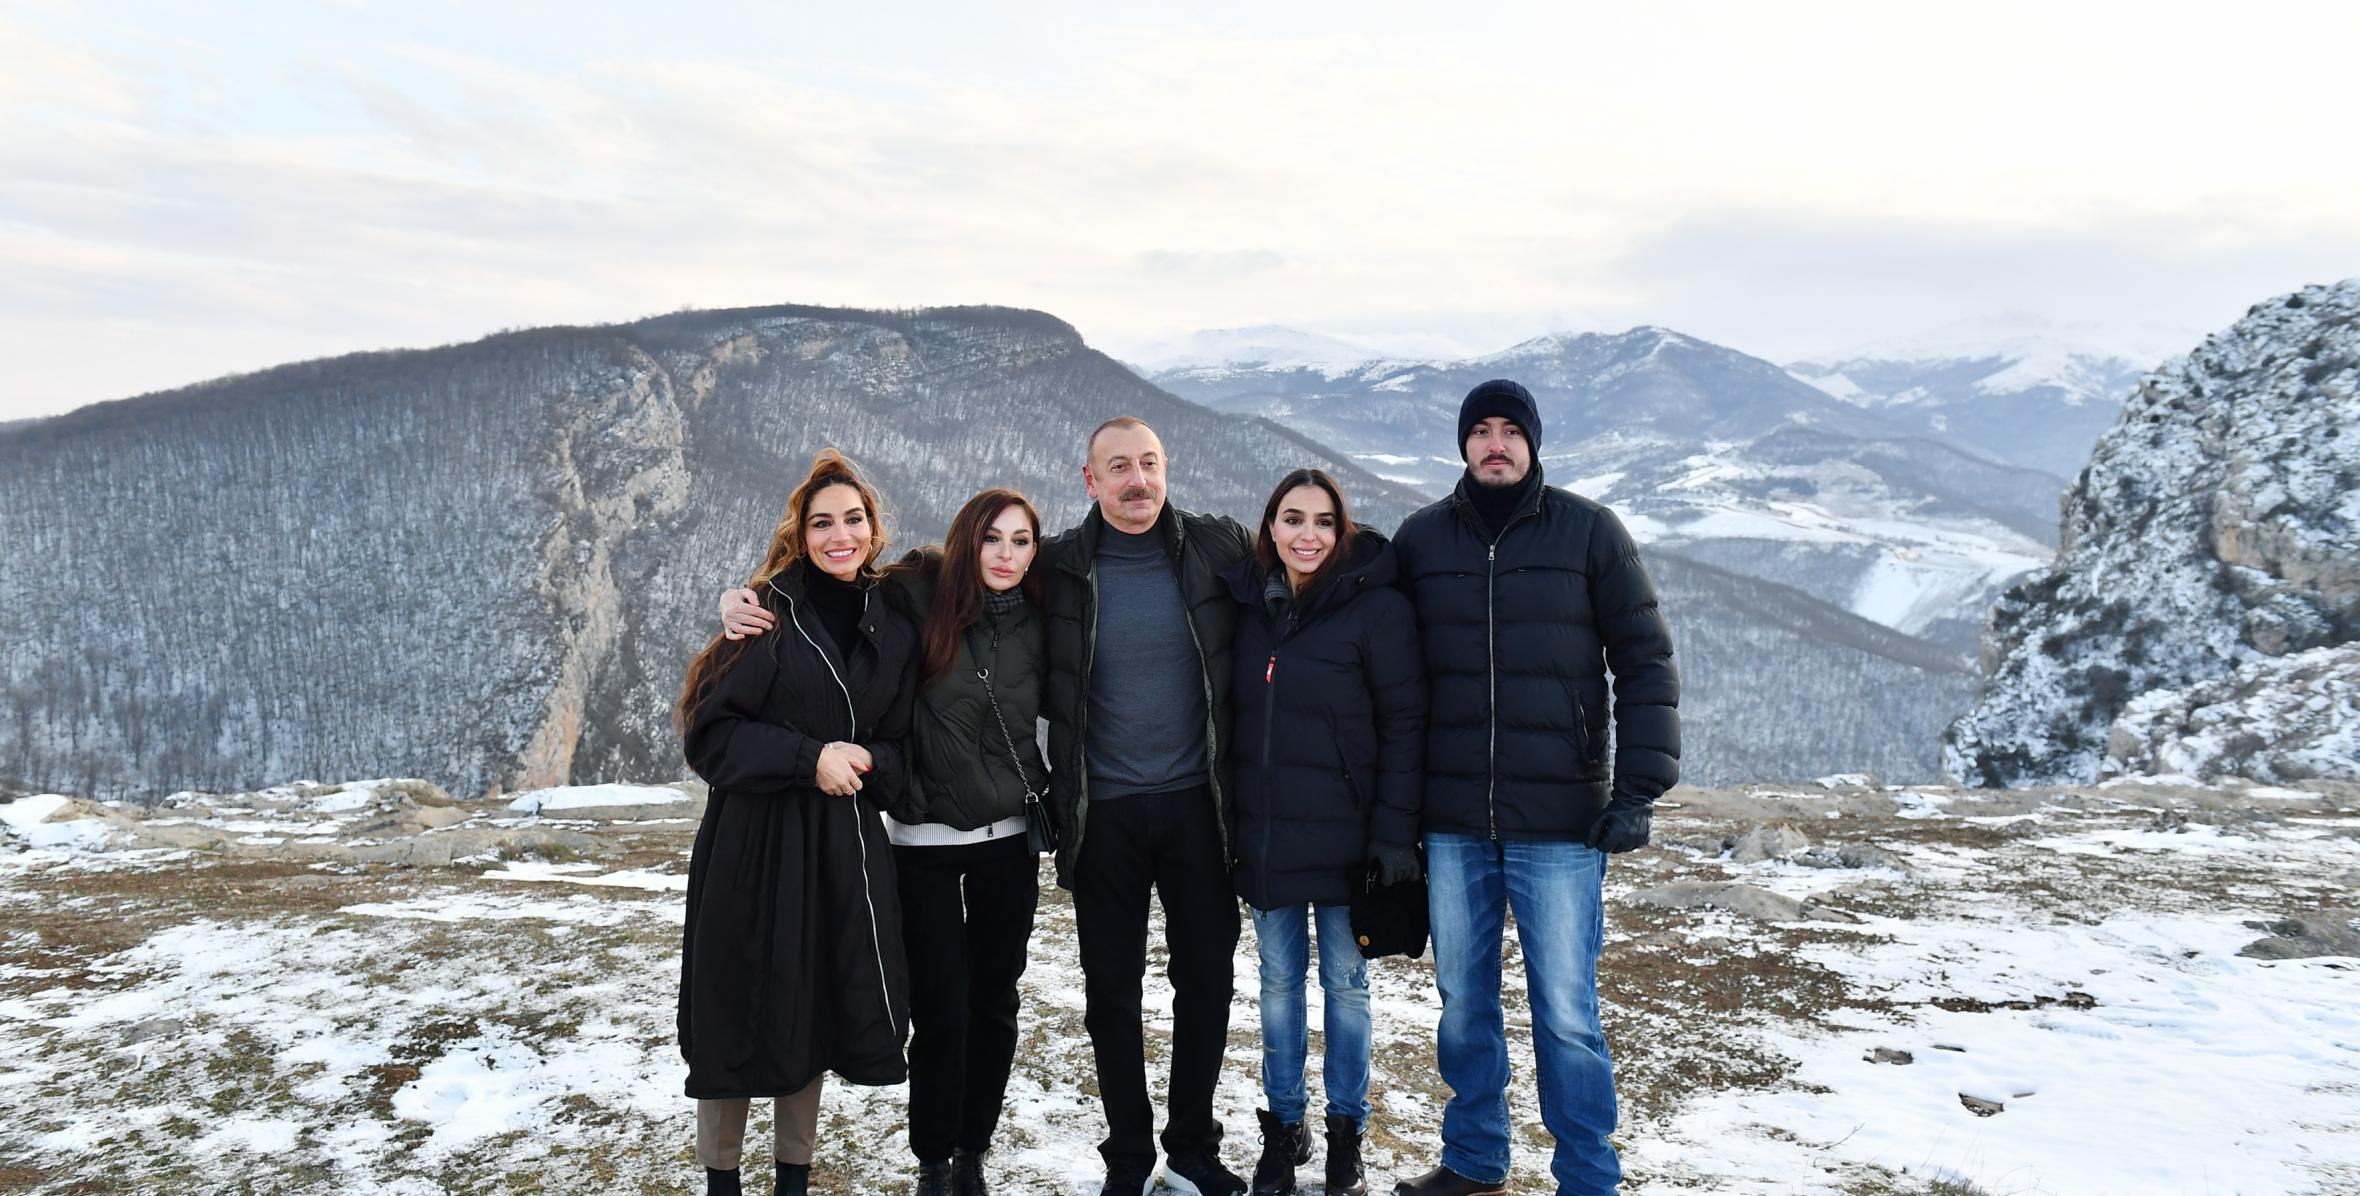 Ilham Aliyev, First Lady Mehriban Aliyeva and family members visited Shusha city